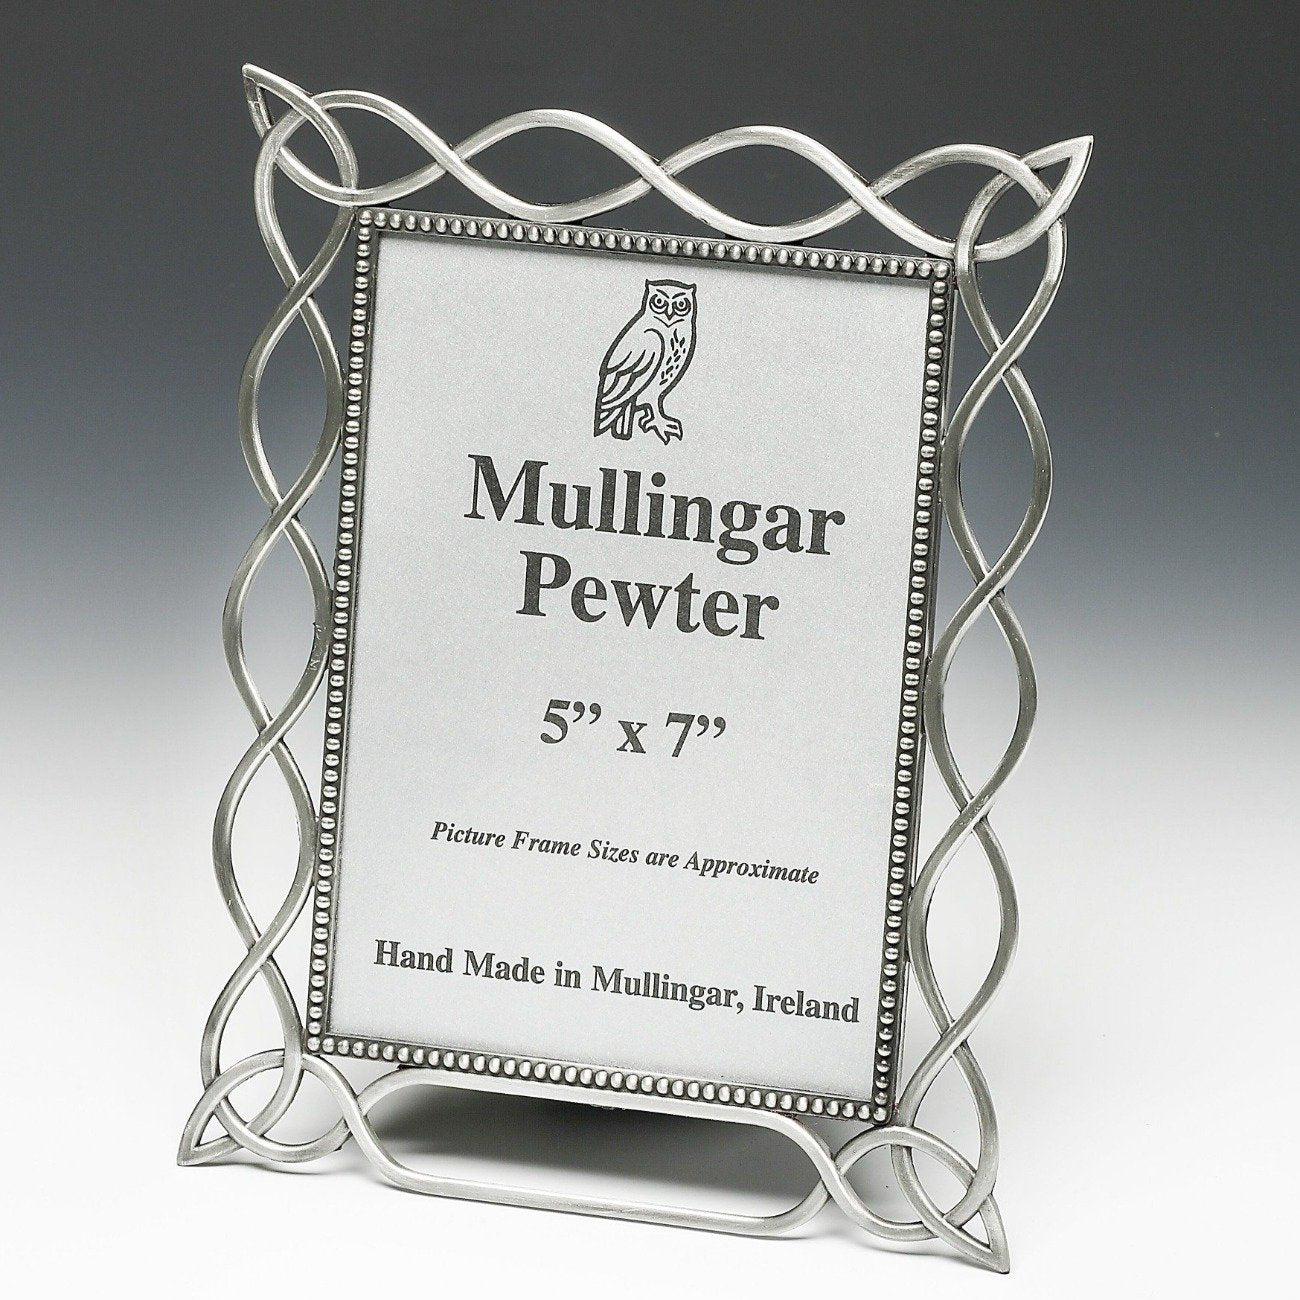 Mullingar Pewter Picture Frame